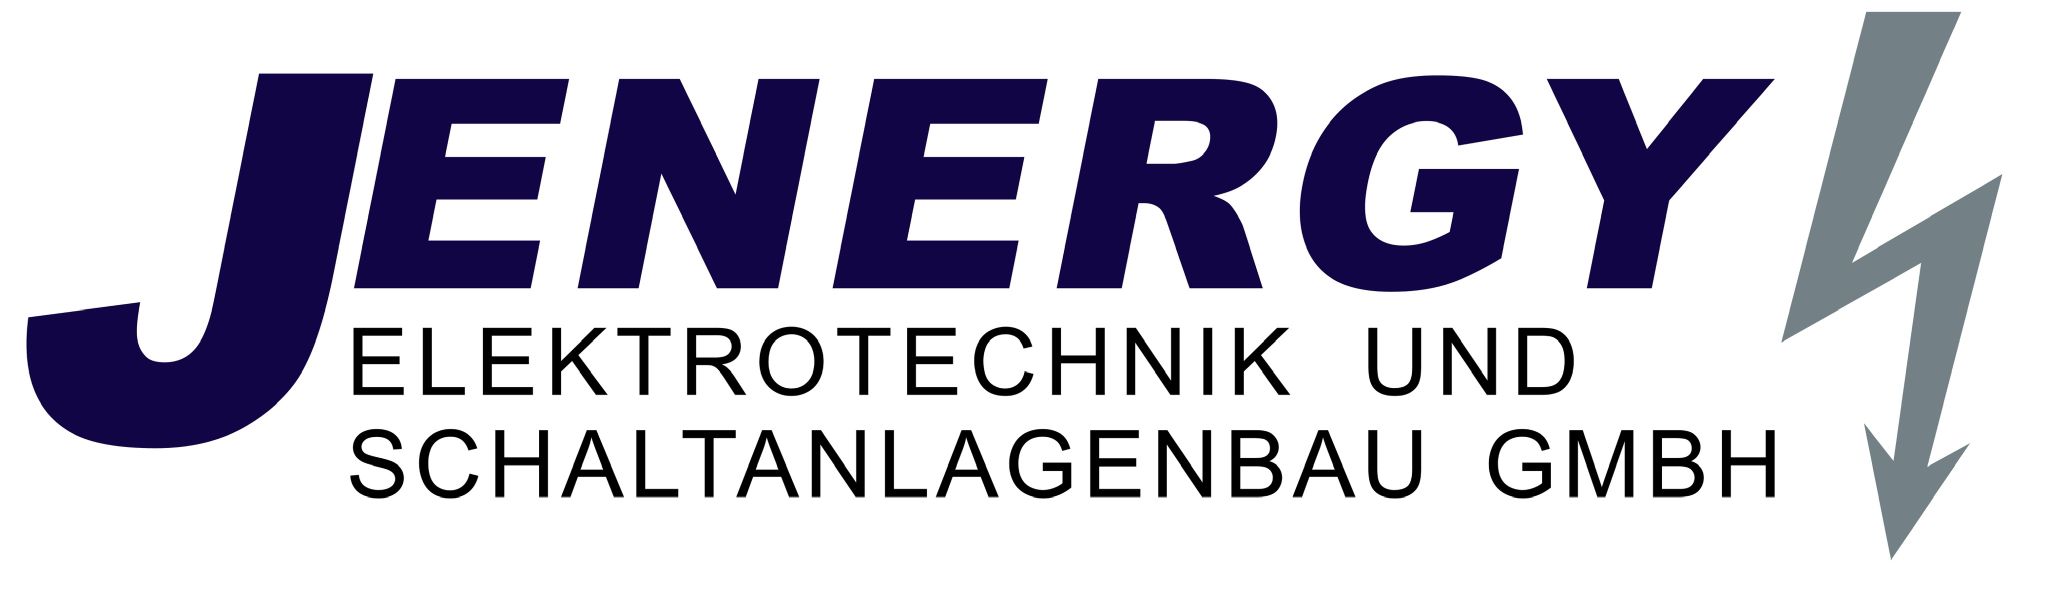 JEnergy Elektrotechnik GmbH